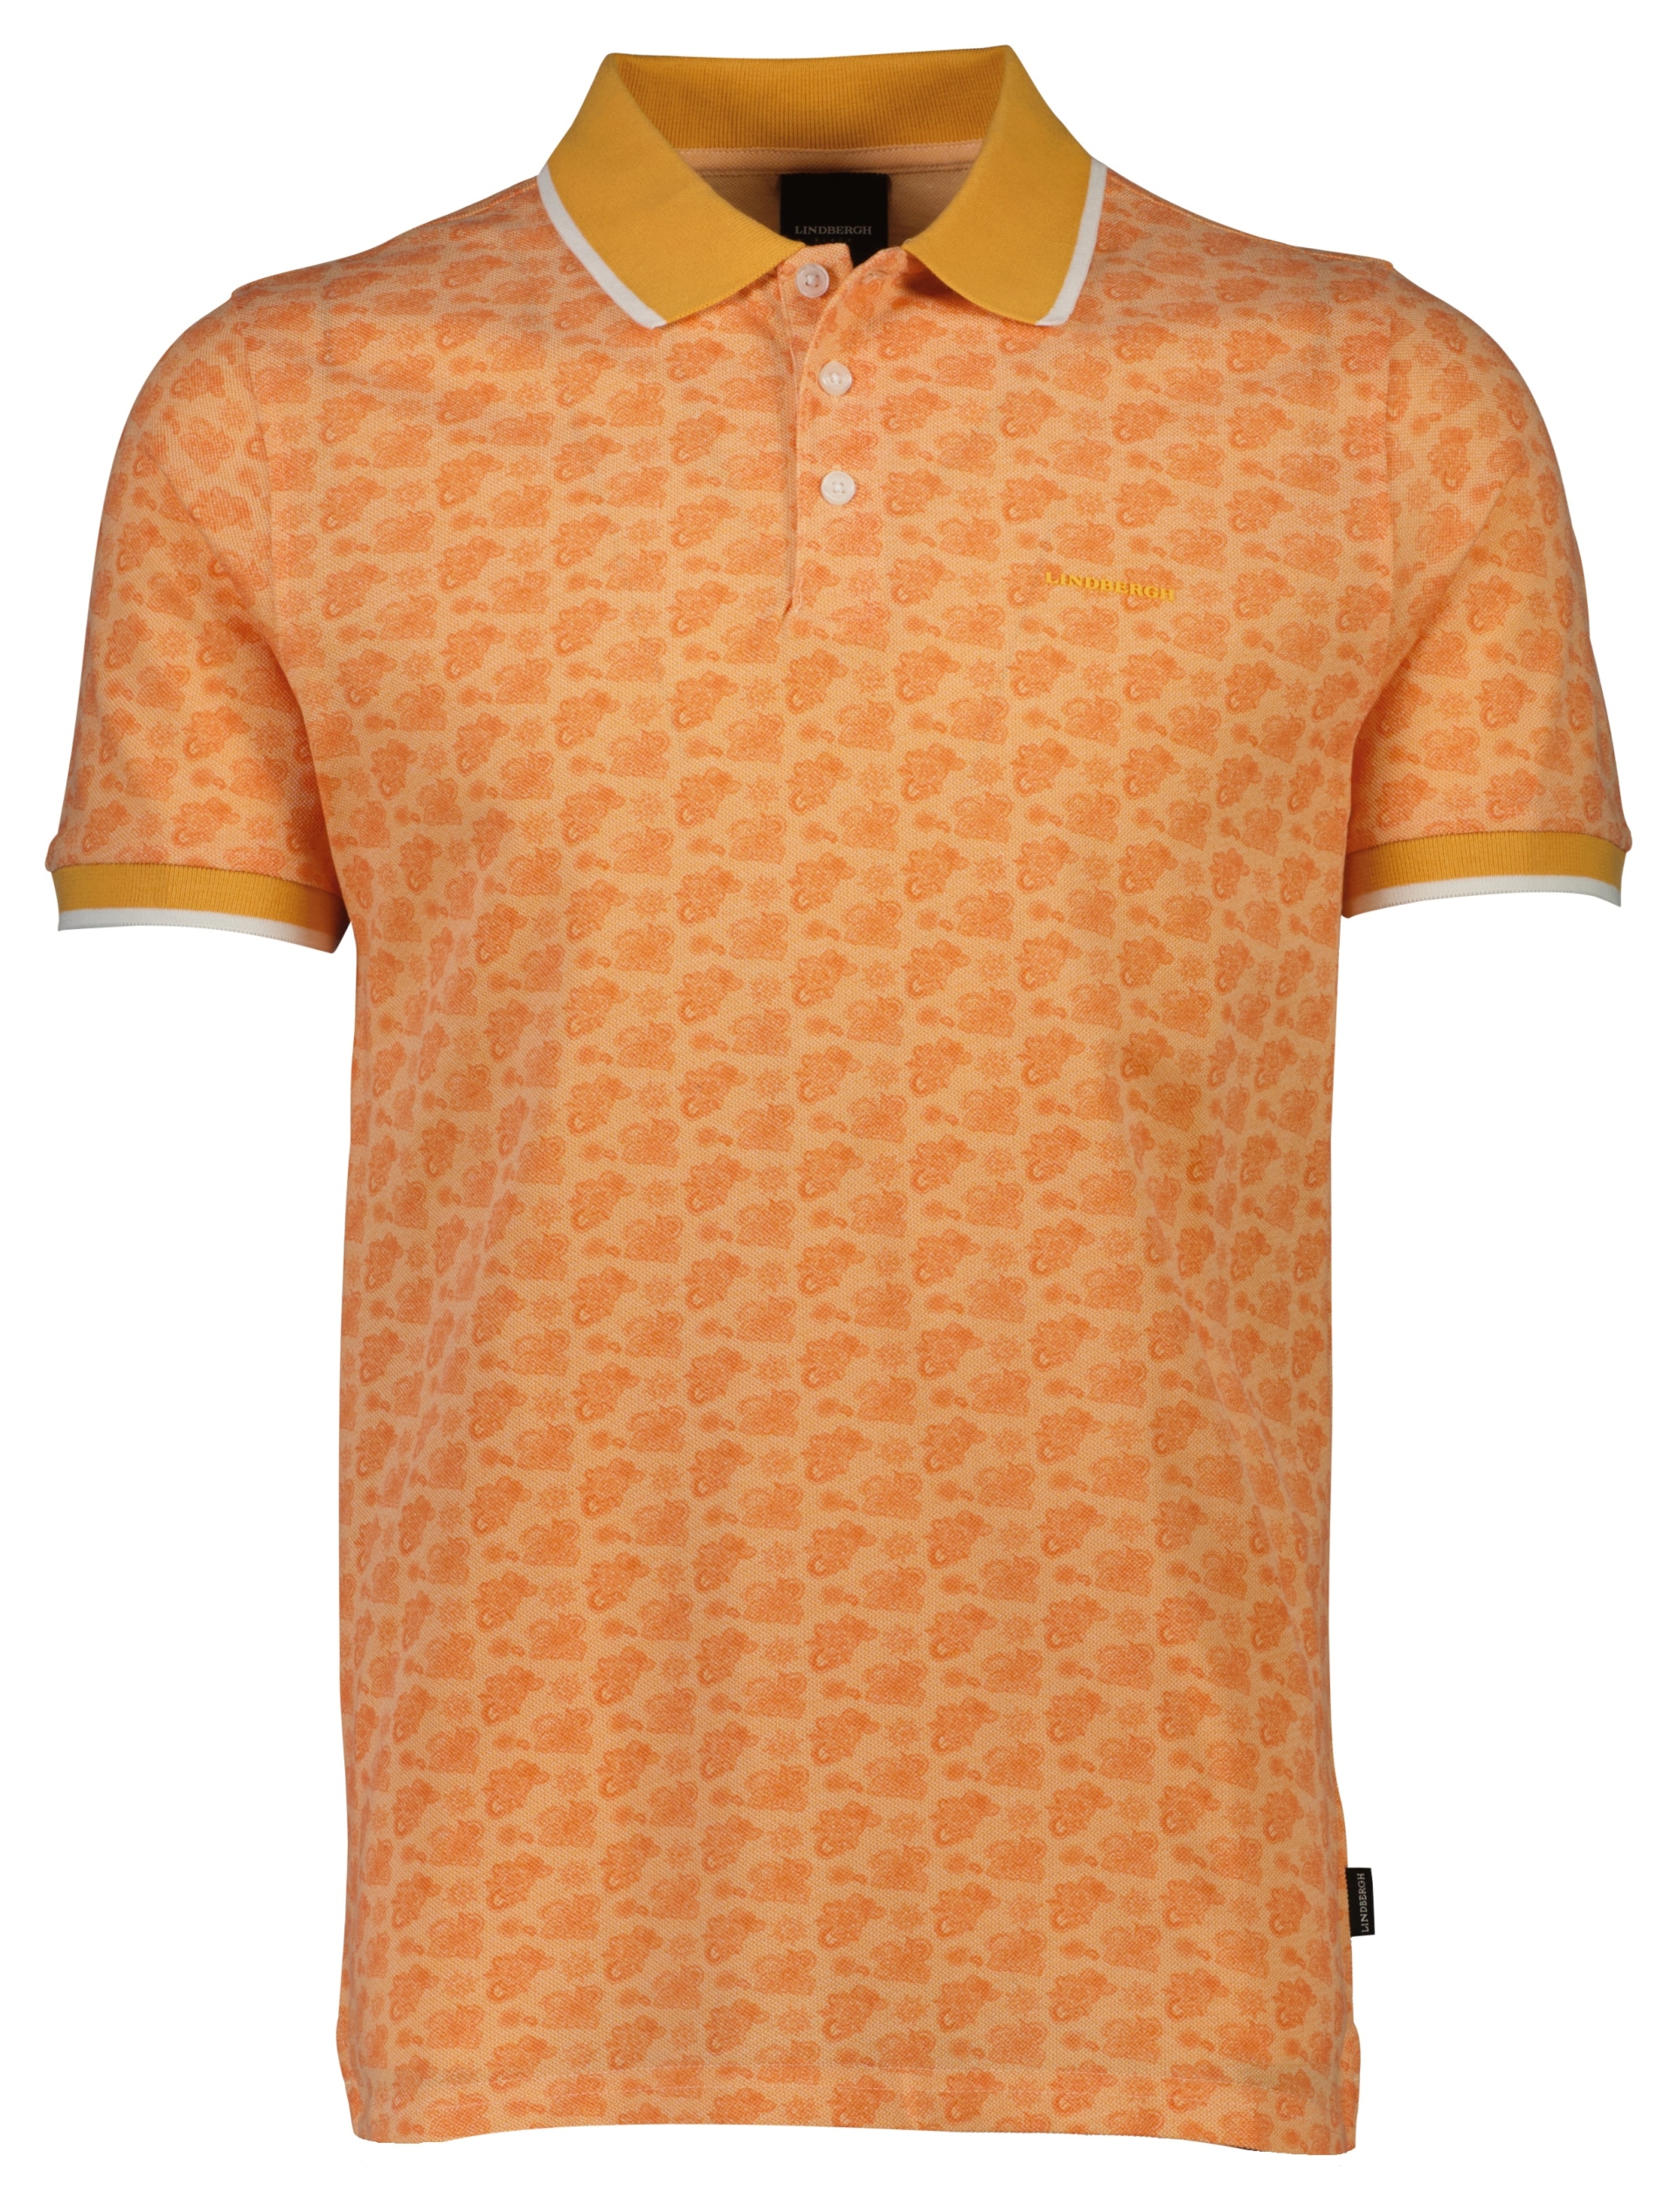 Lindbergh Poloshirt orange / lt apricot mix